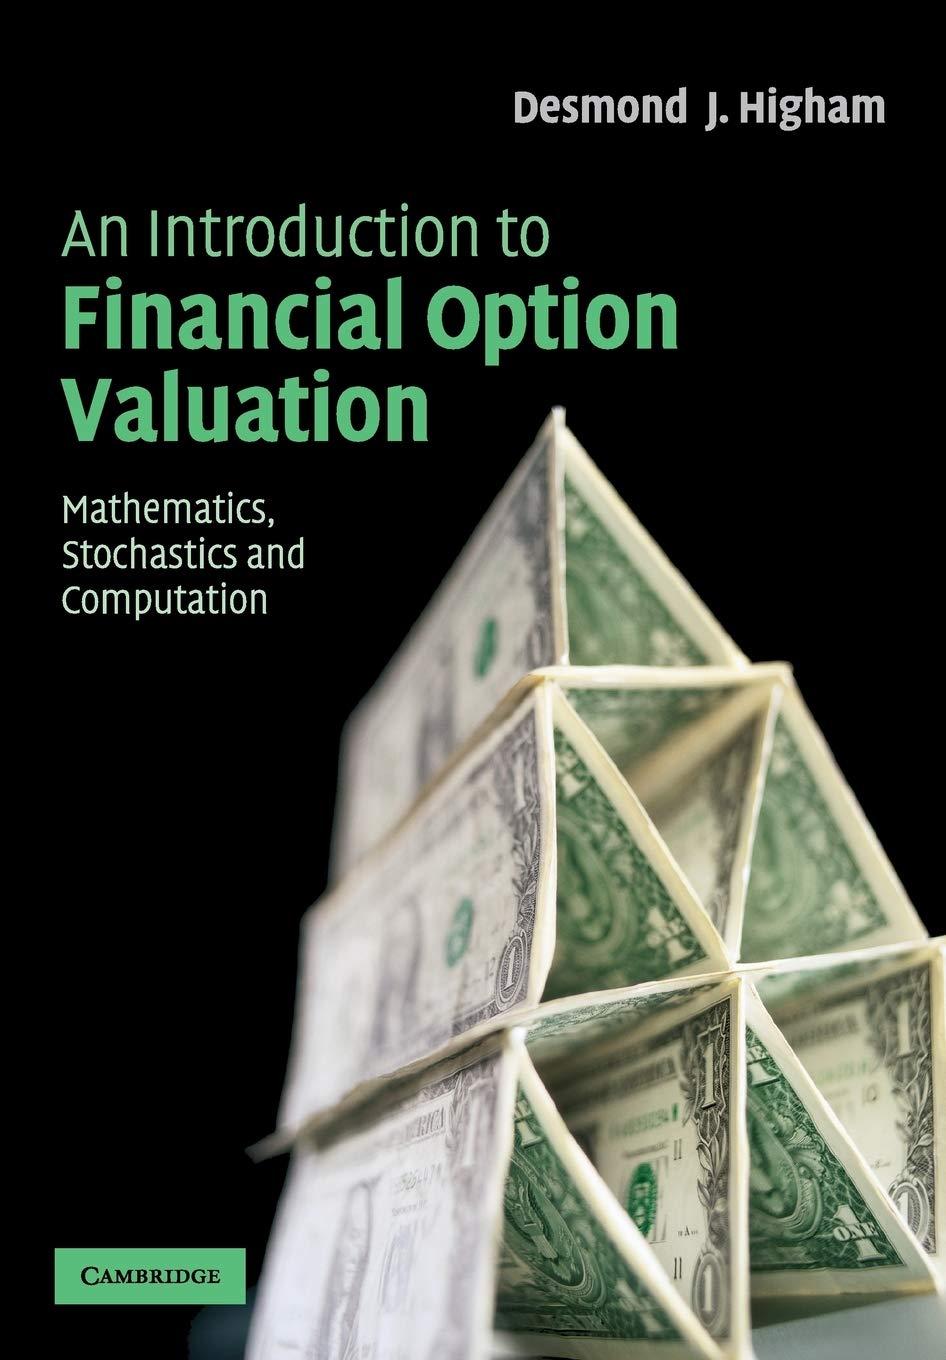 an introduction to financial option valuation mathematics stochastics and computation 1st edition desmond j.